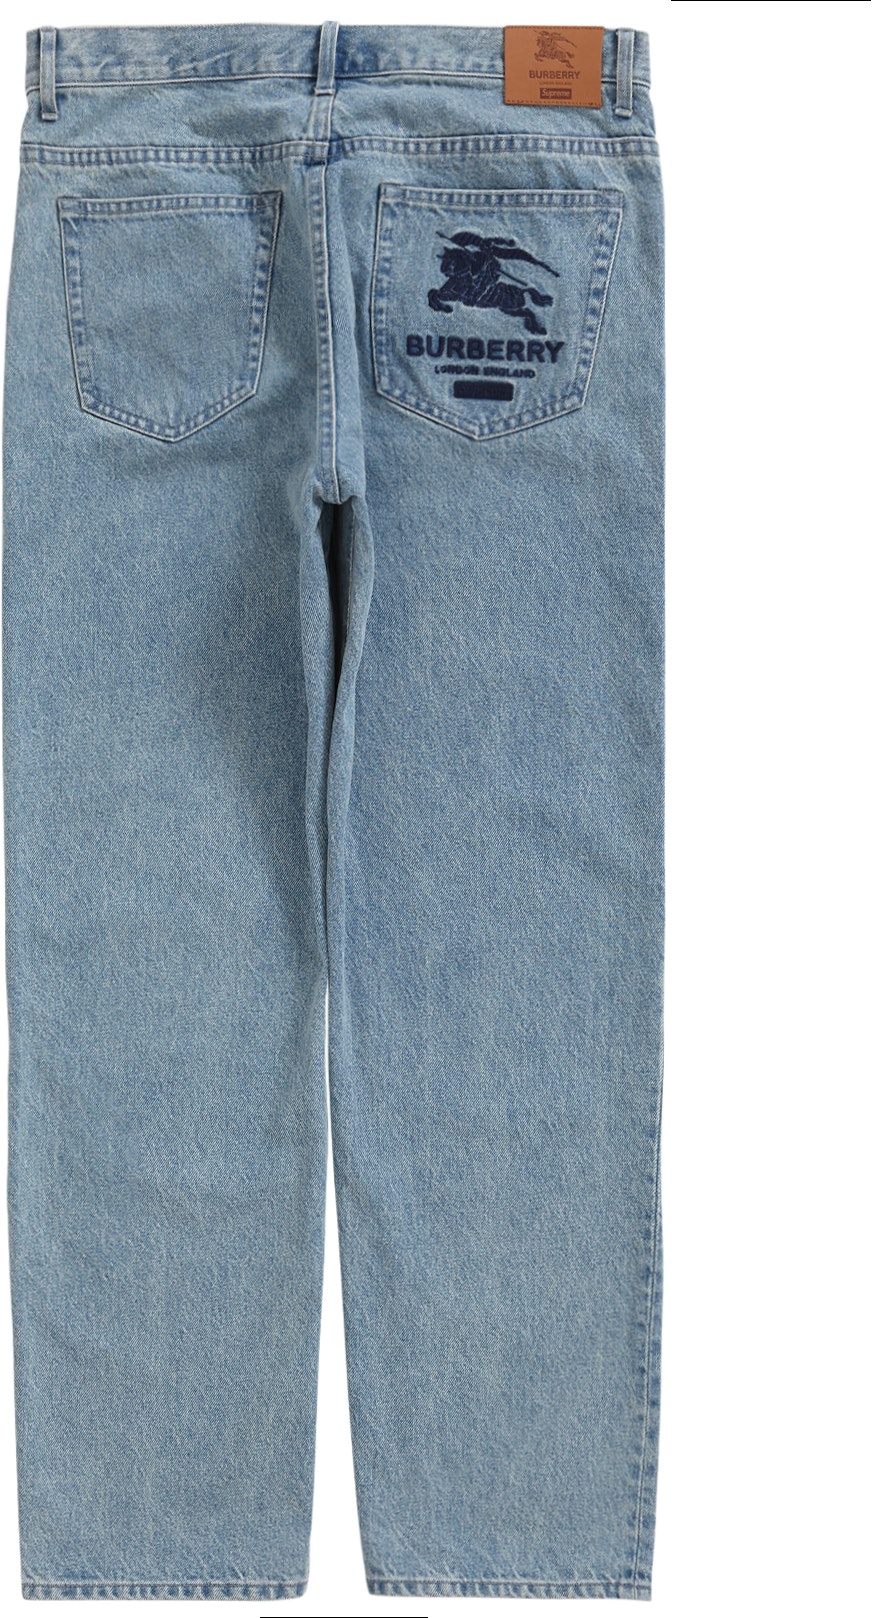 Supreme, Pants, Supreme Burberry Jeans